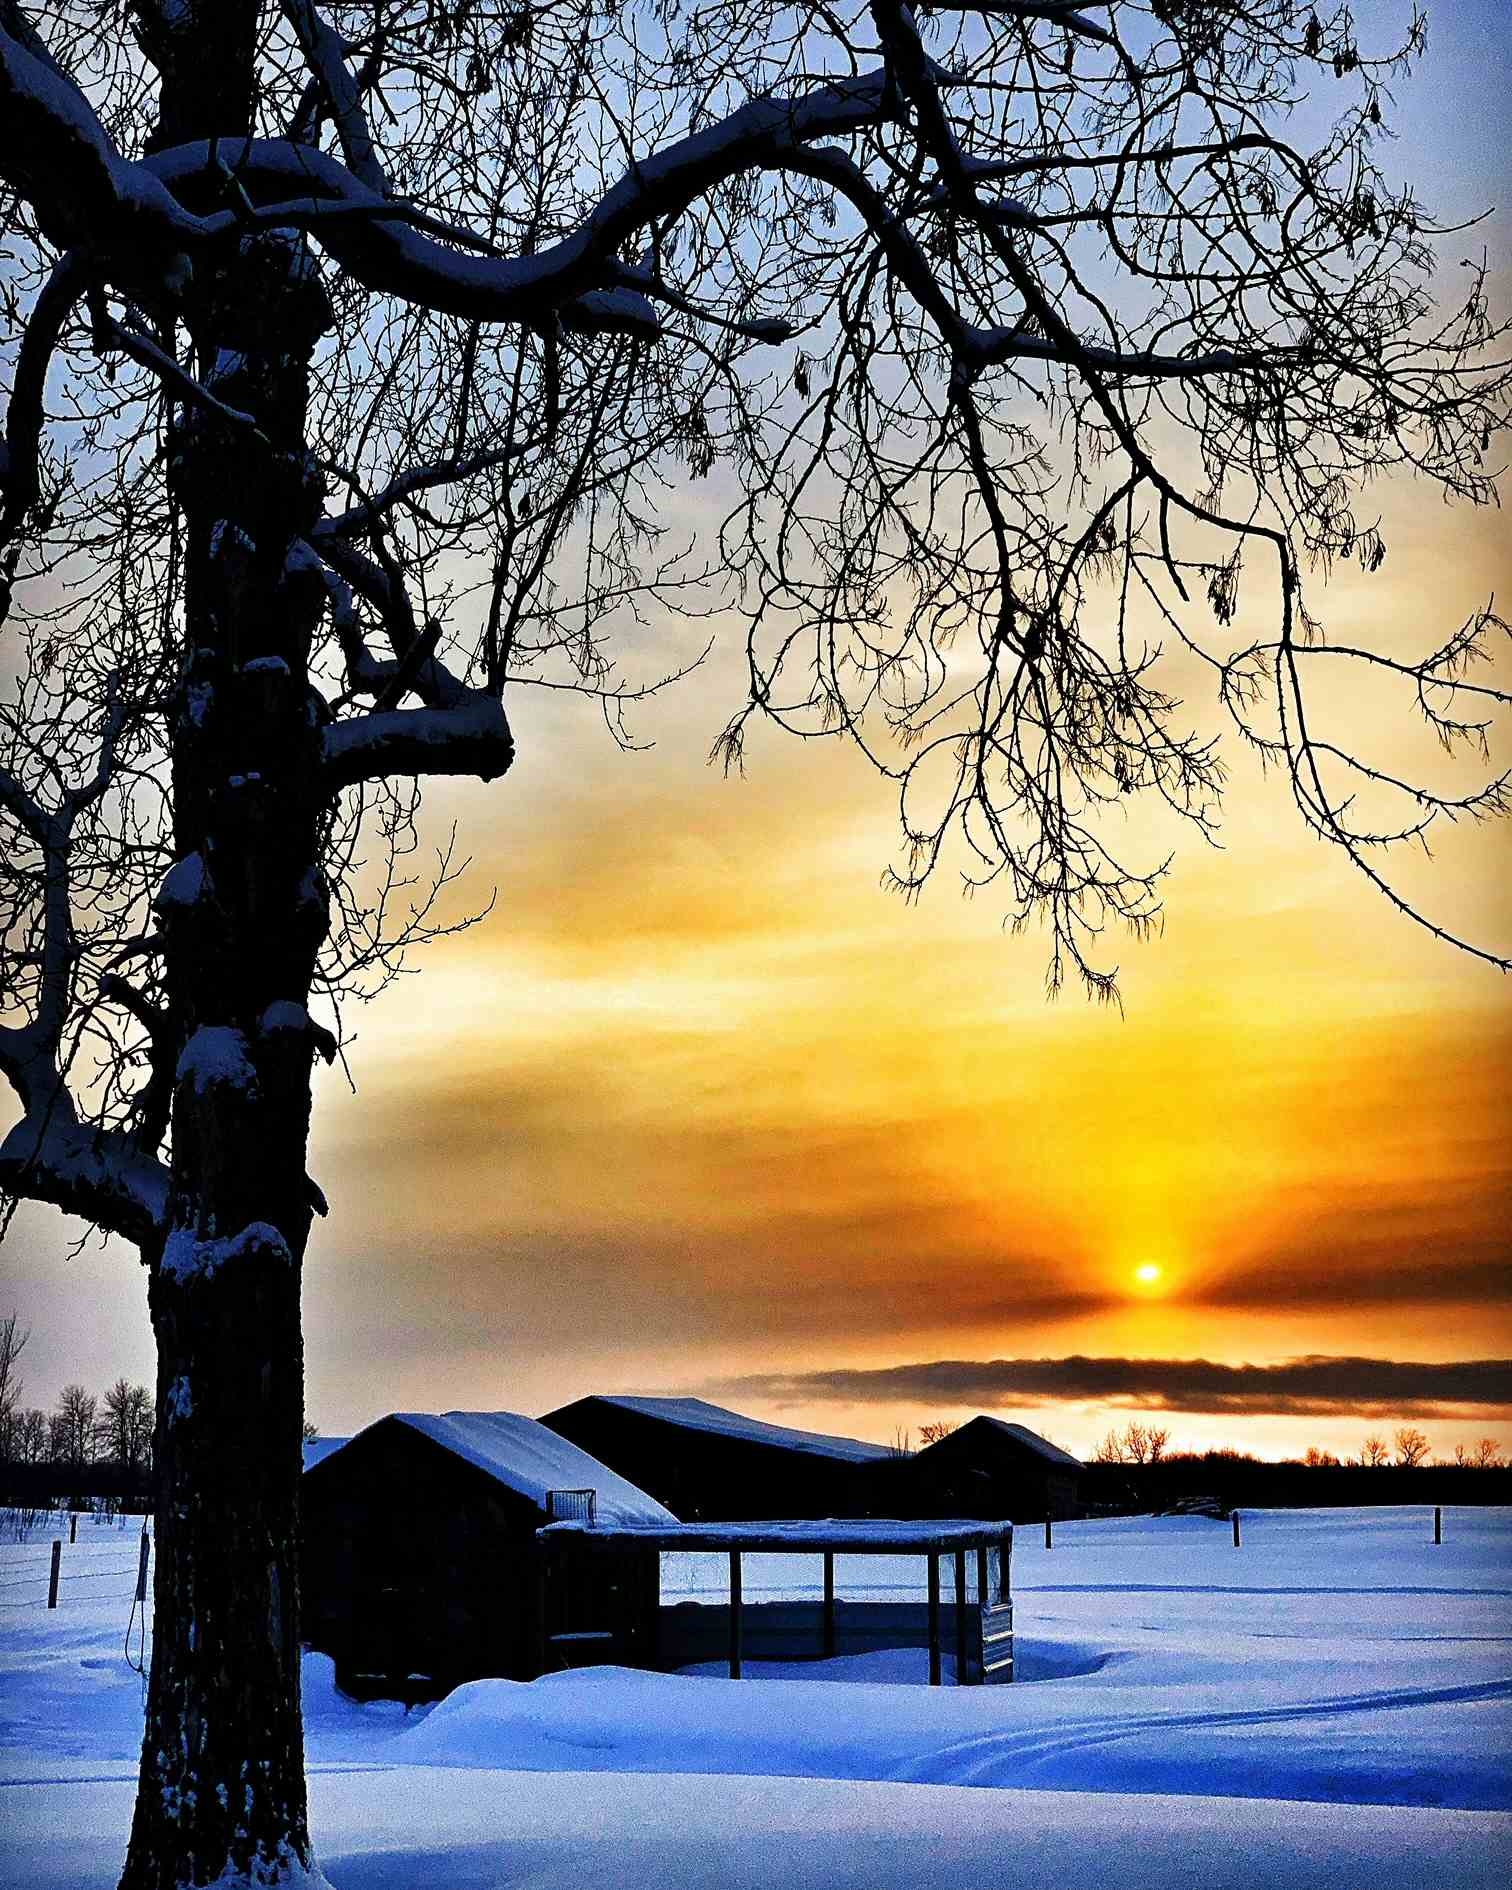 Late winter sunset